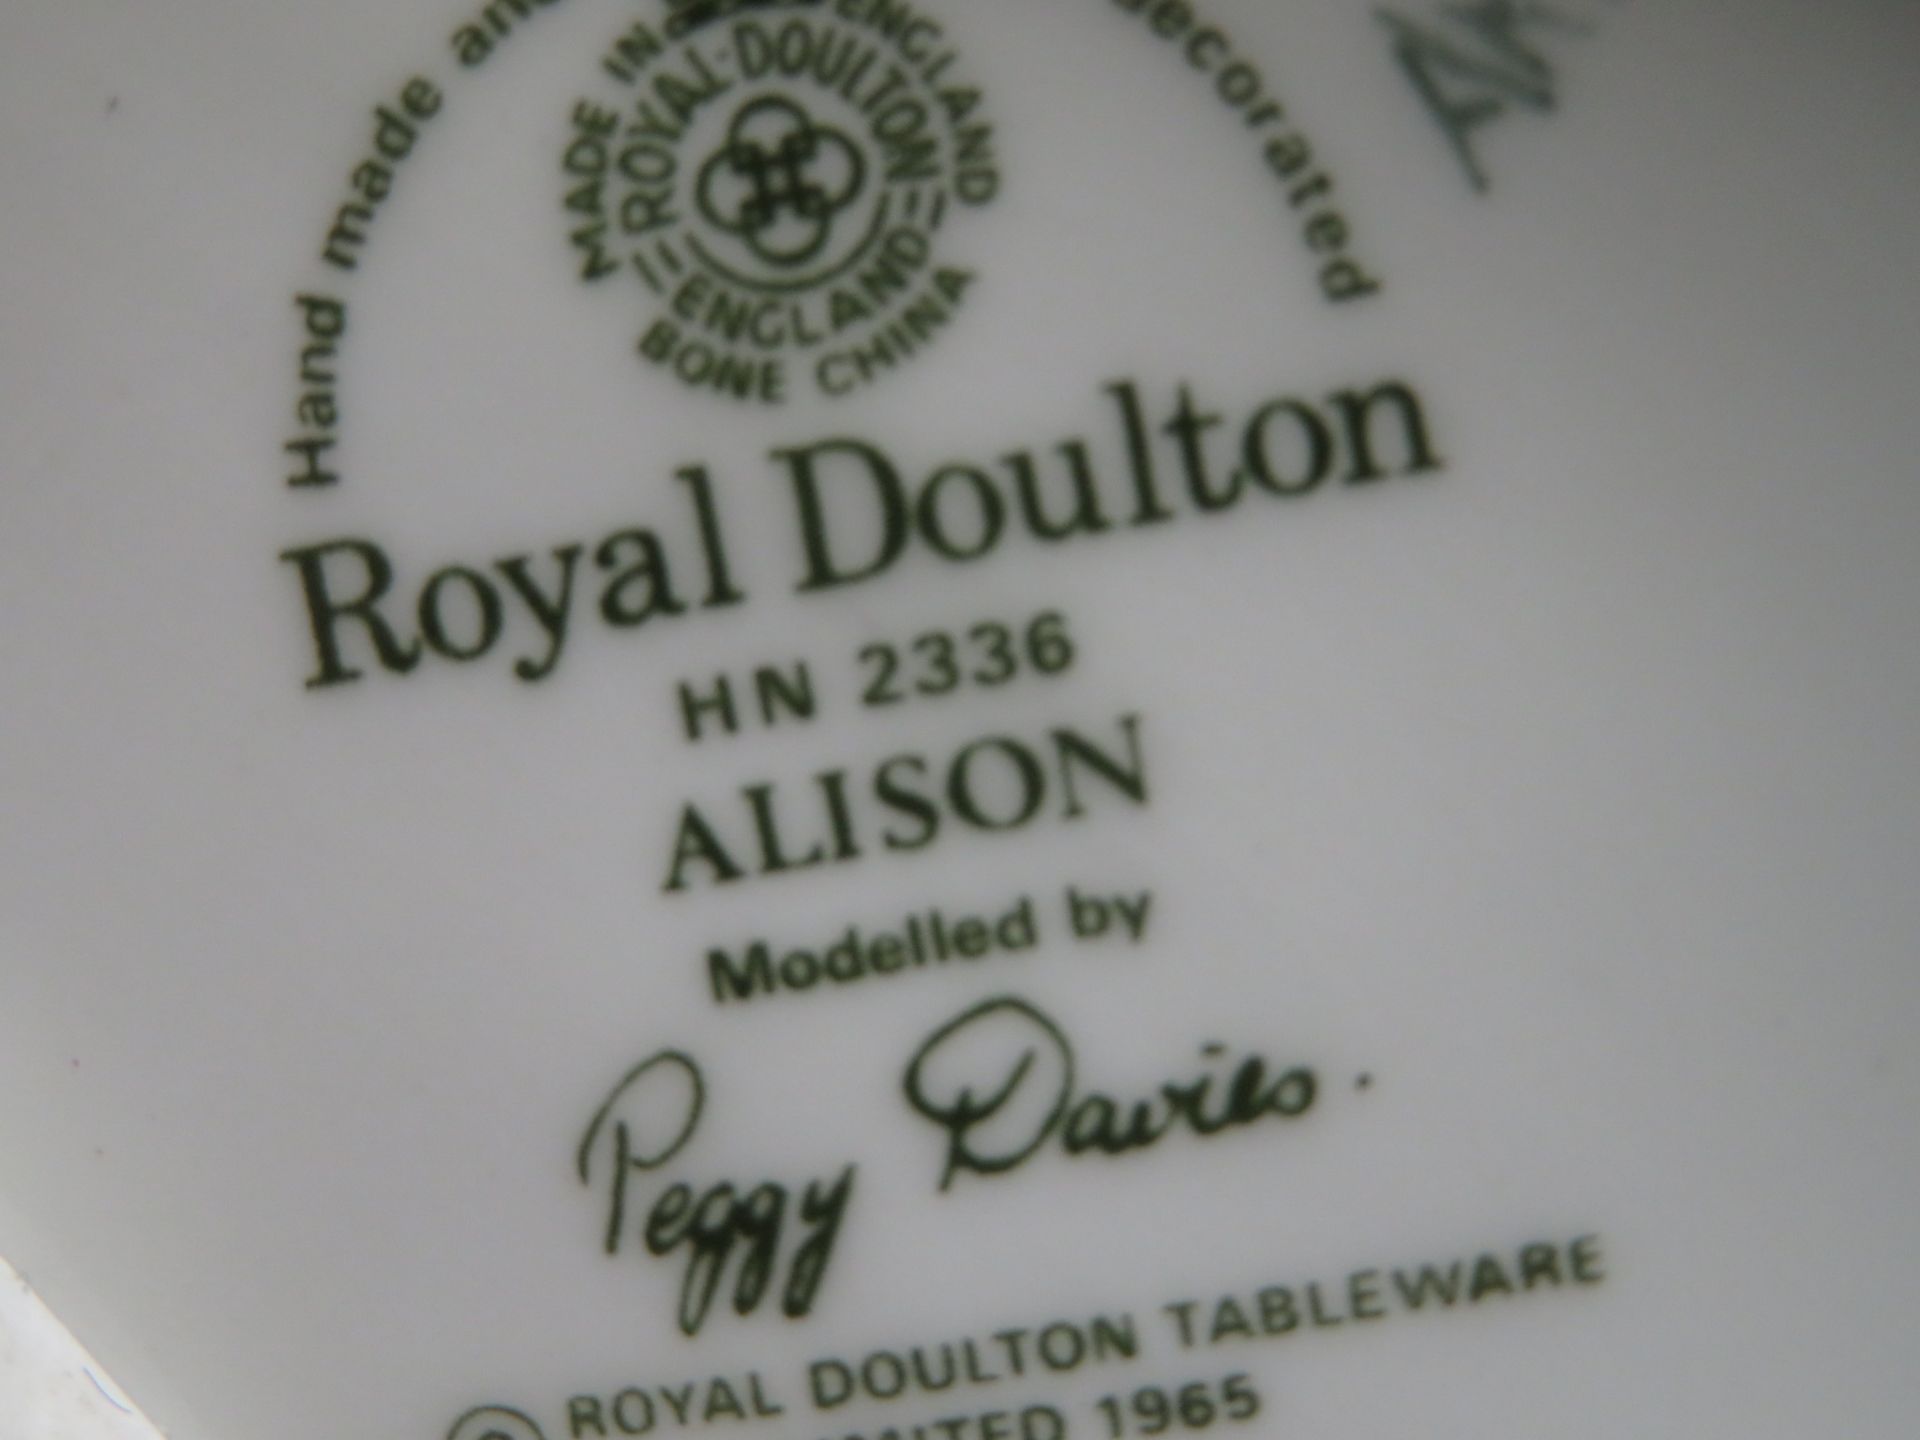 2 Porzellanfiguren, "Alison" und "Julia", England, Royal Doulton, aus der Serie Peggy Davies Classi - Image 2 of 2